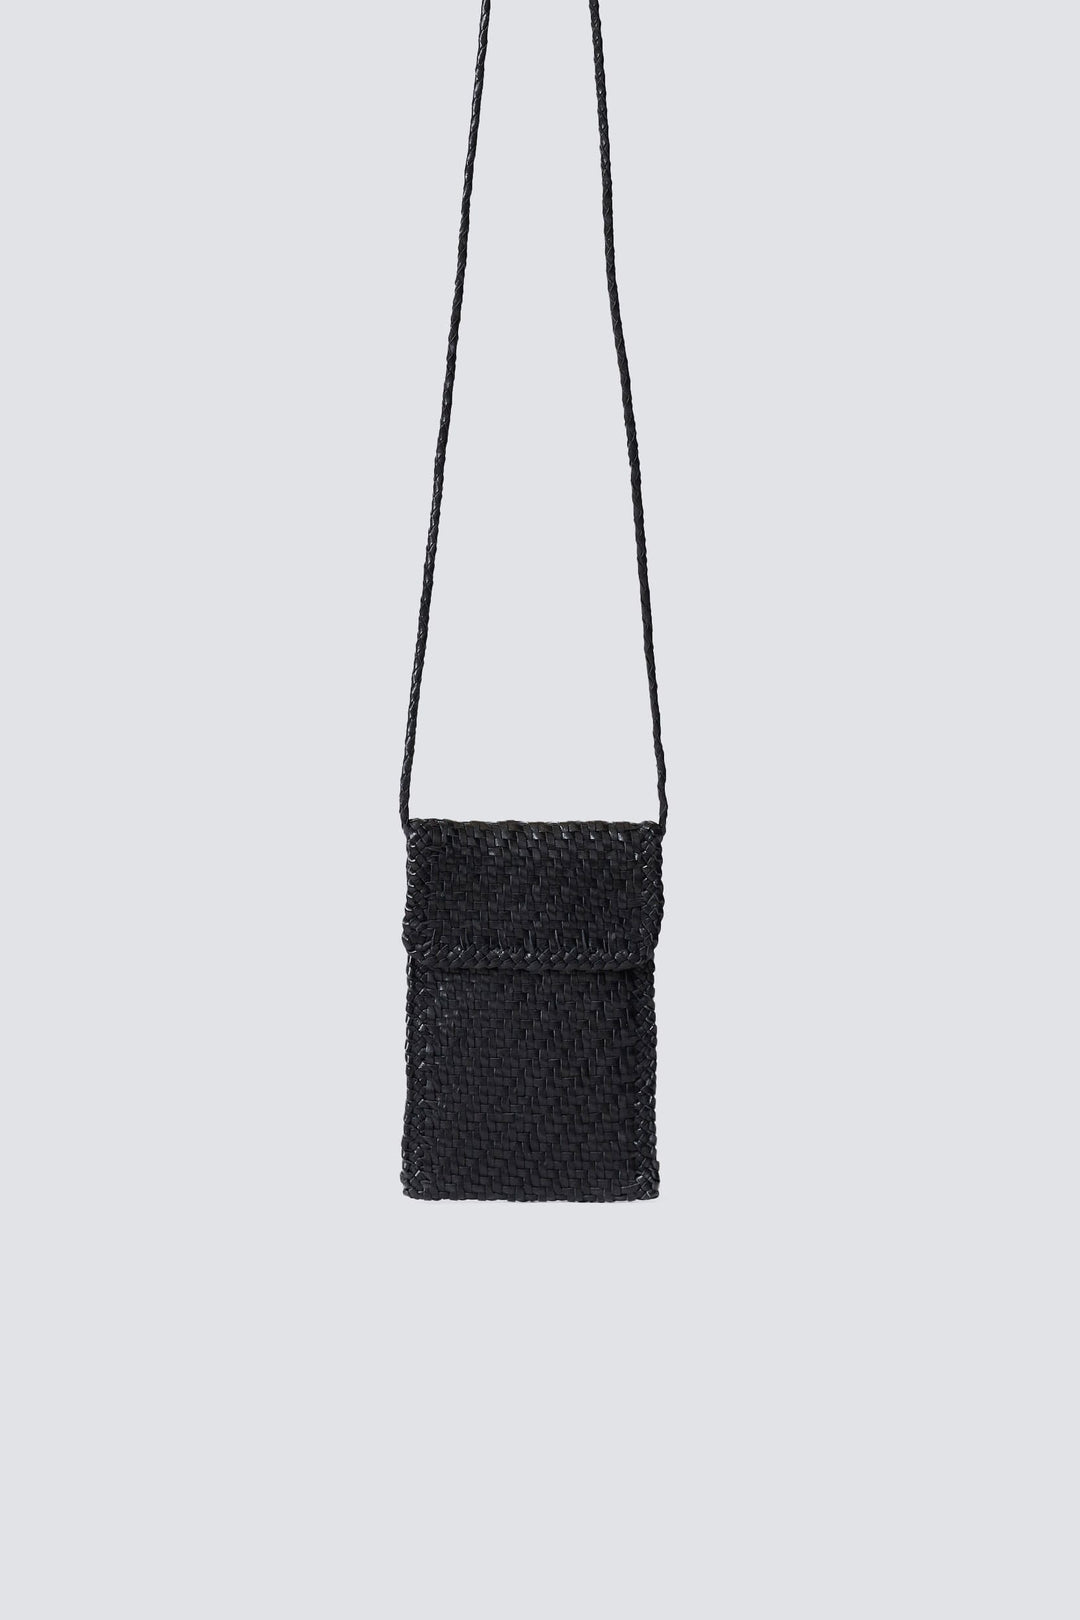 Dragon Diffusion woven leather bag handmade - Phone Crossbody Black